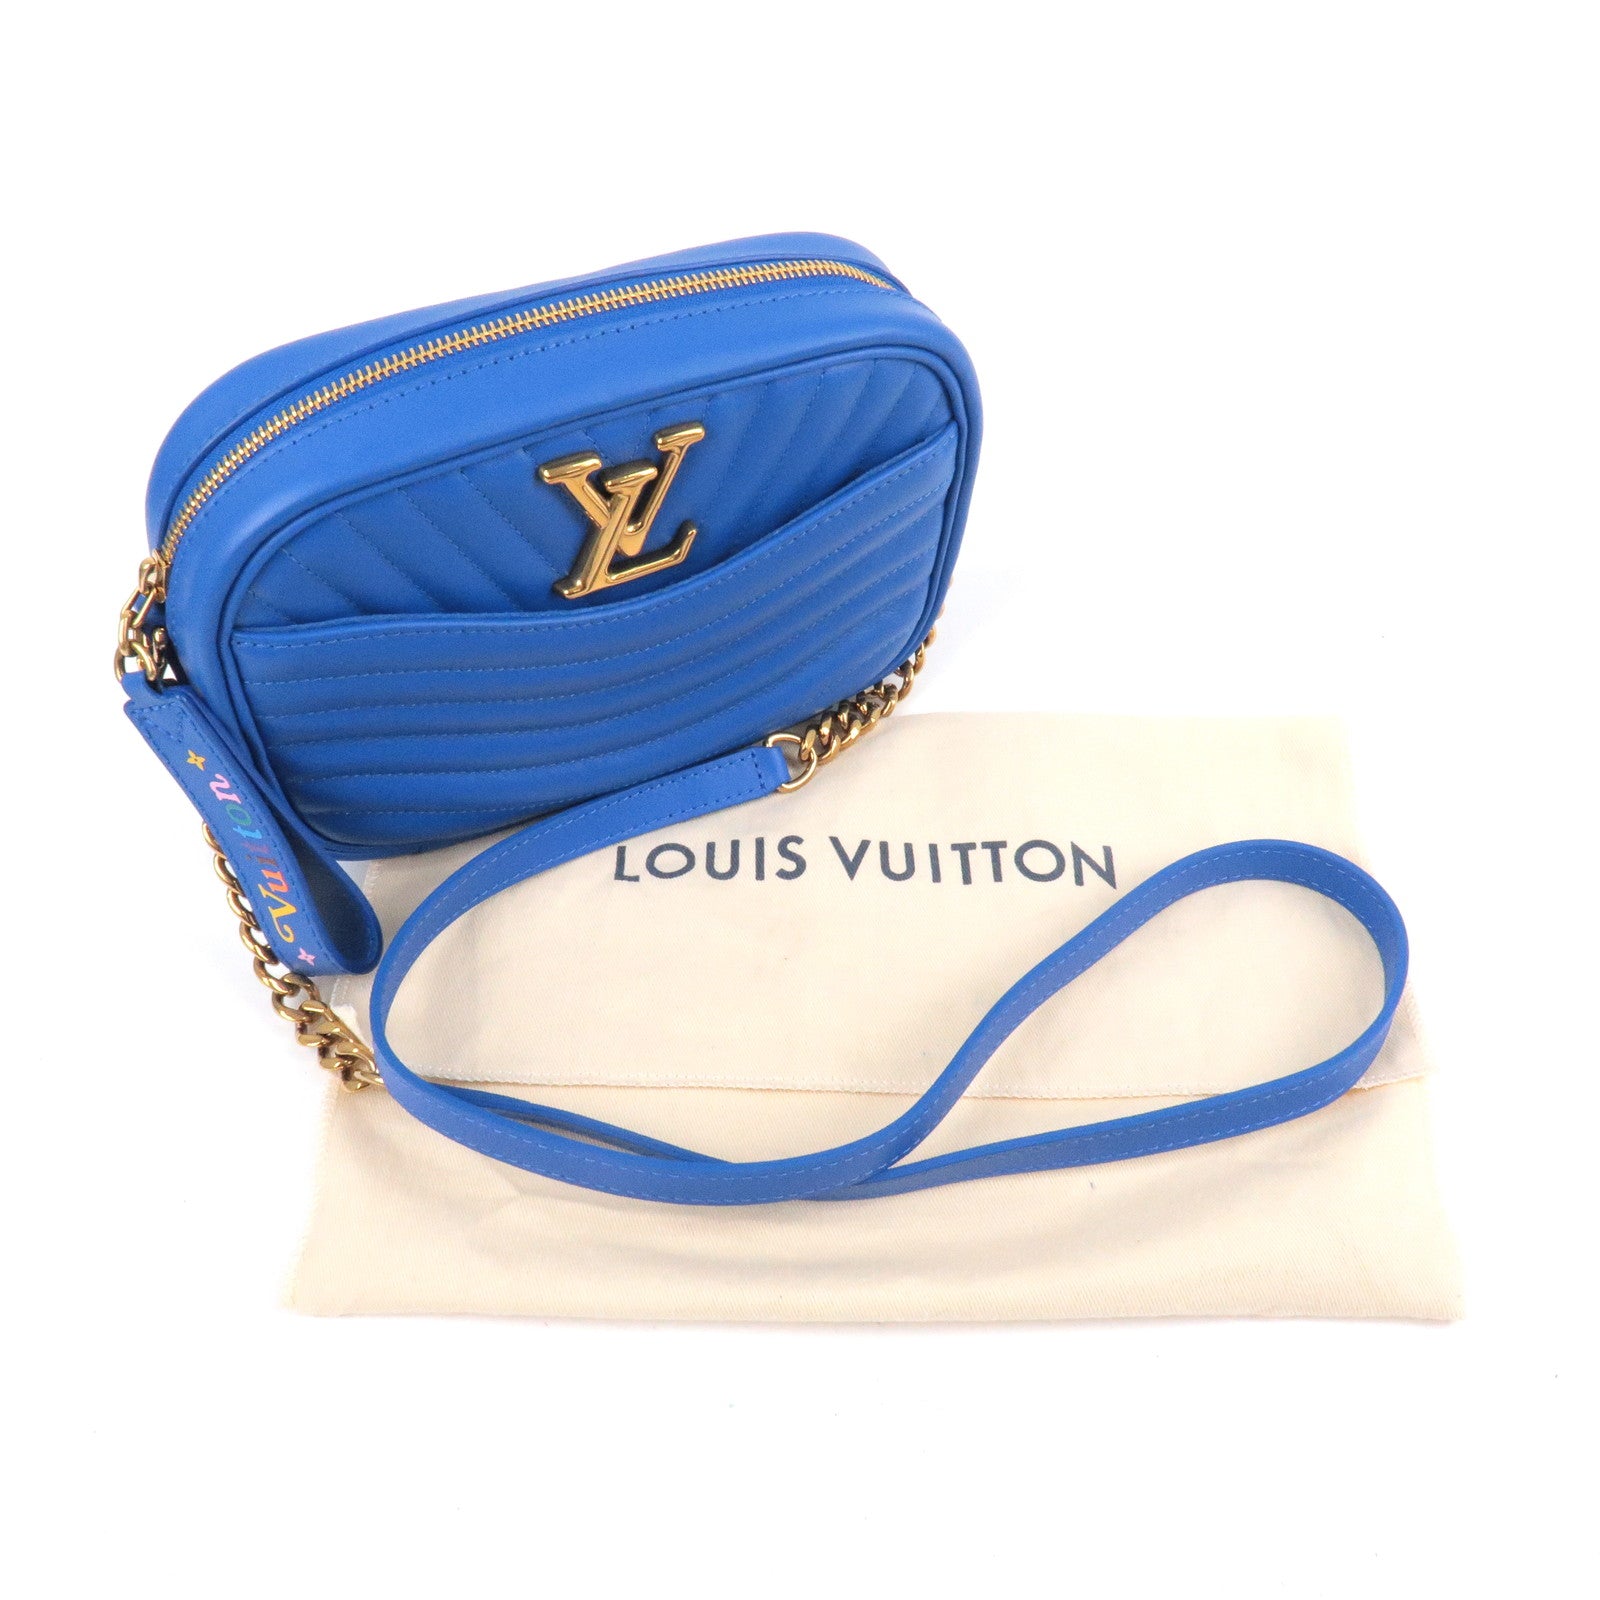 louis vuitton bag blue  Louis vuitton bag, Bags, Vuitton bag